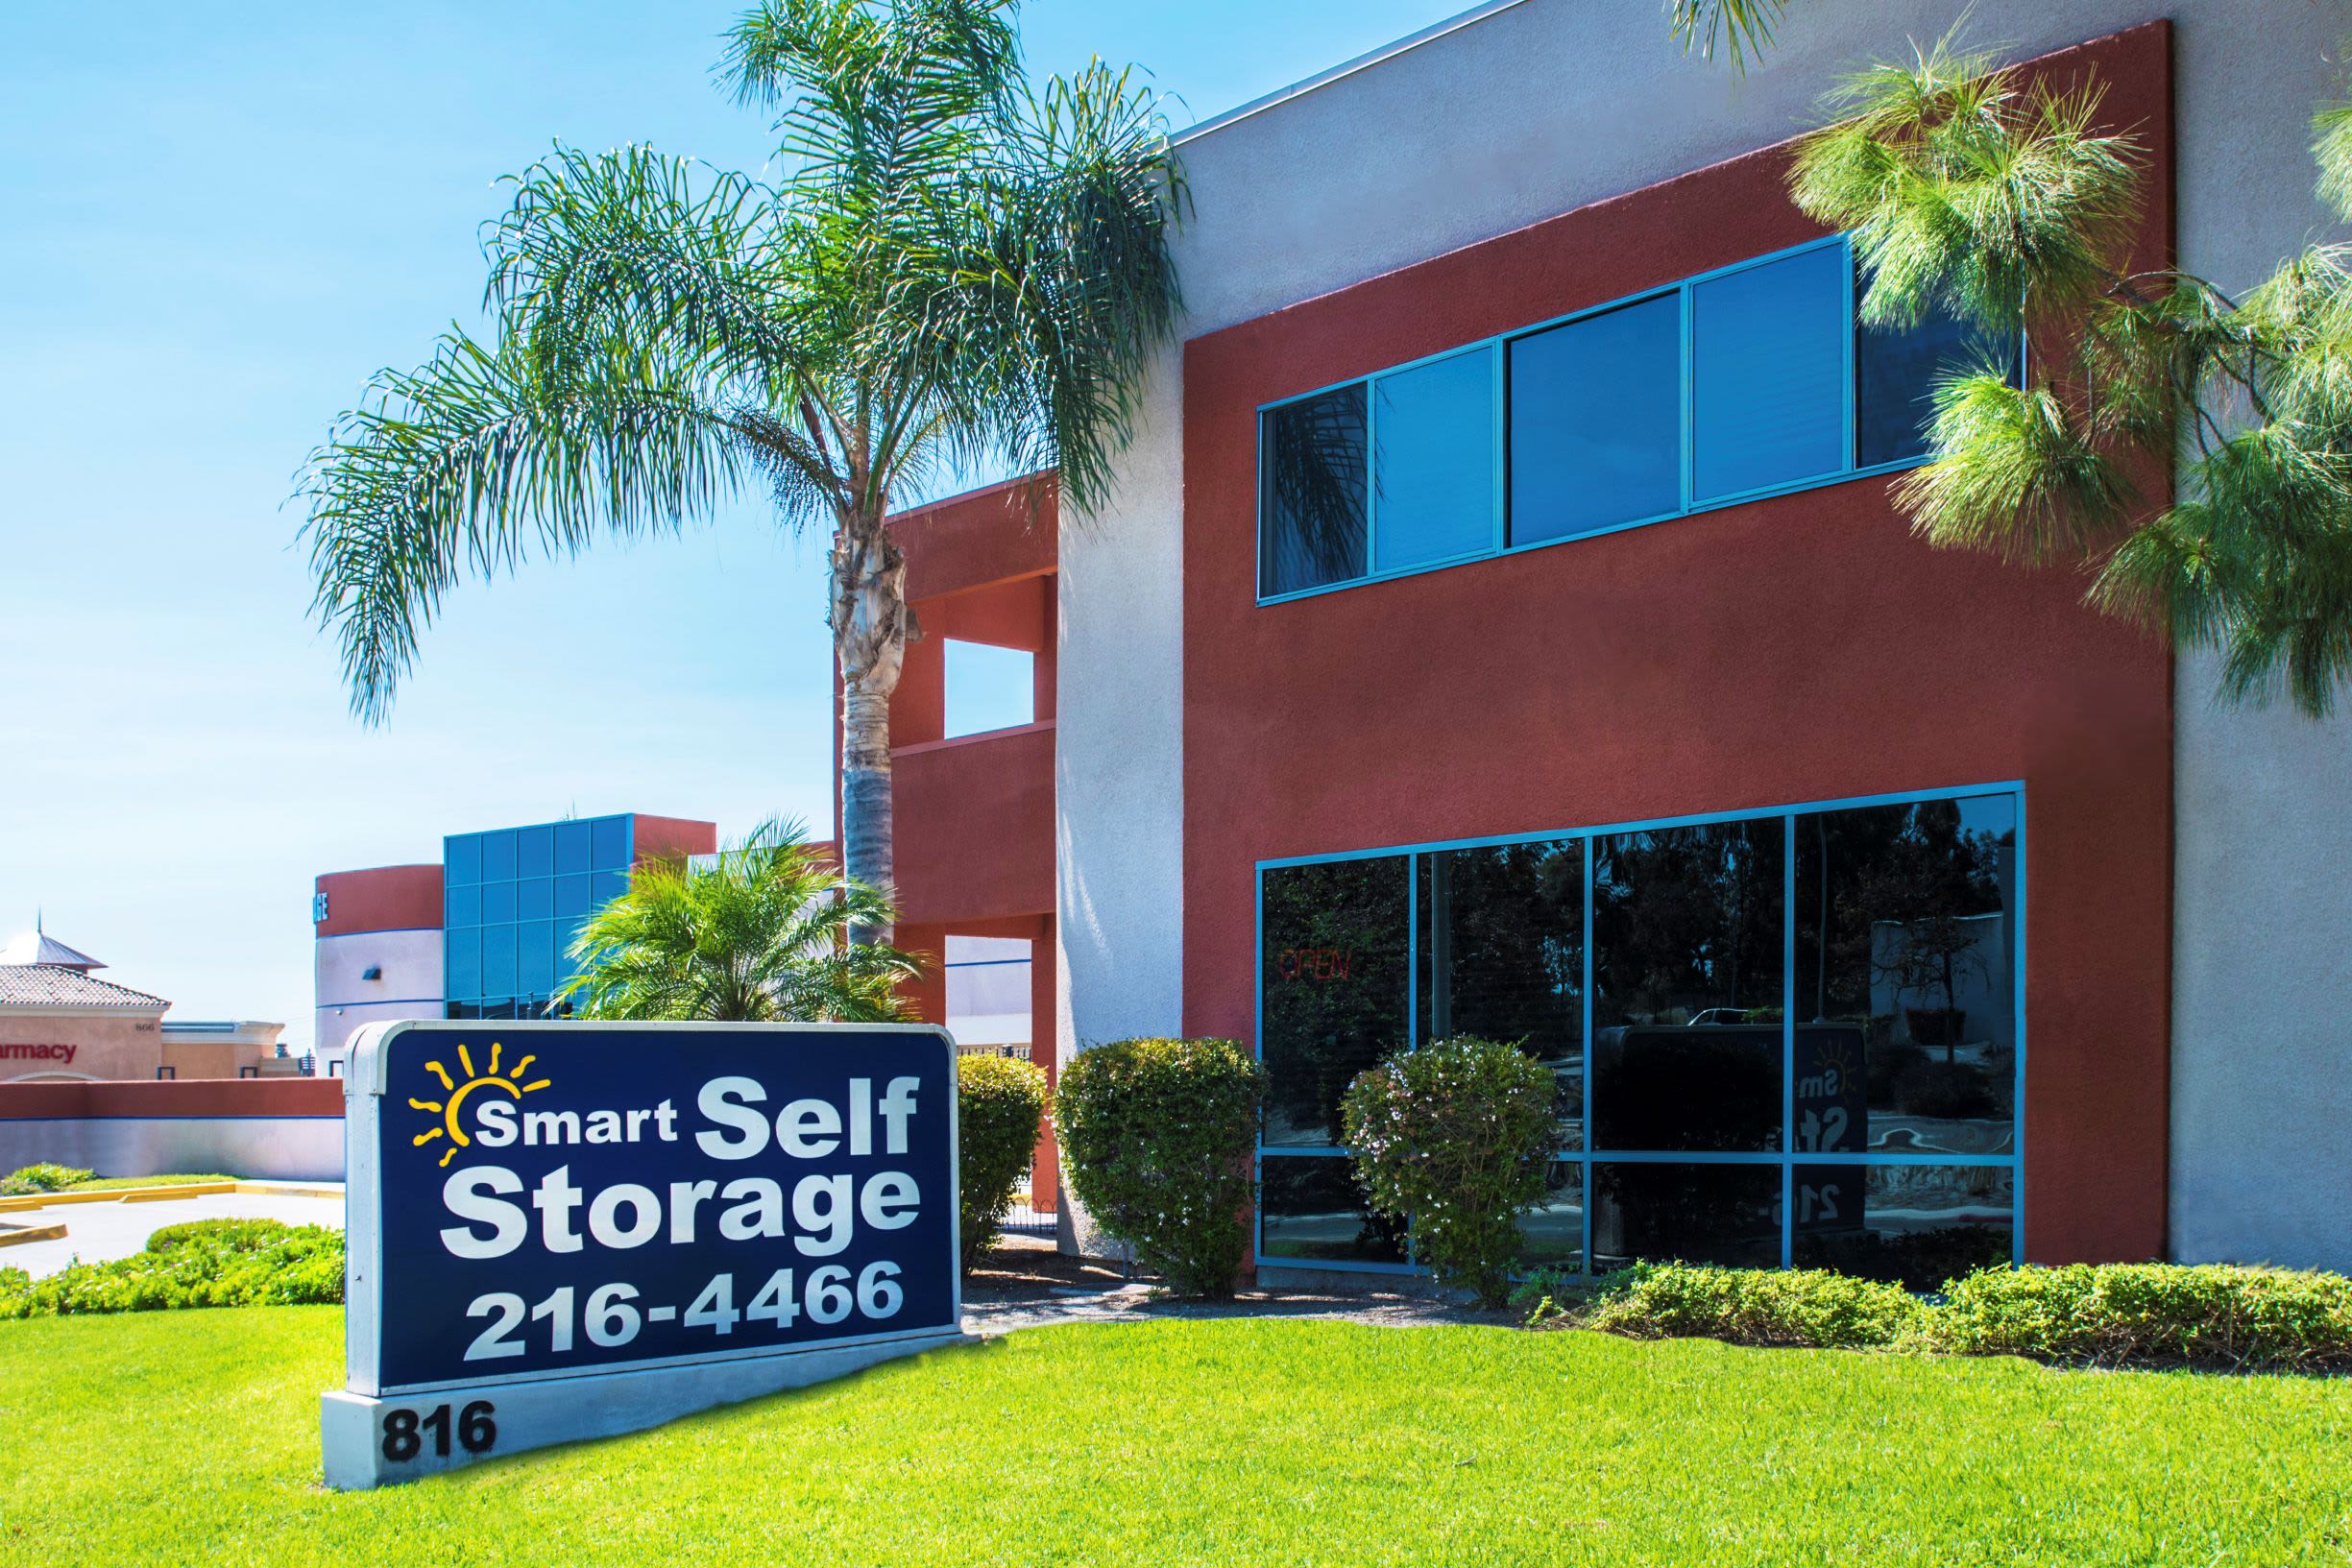 Signage at Smart Self Storage of Eastlake in Chula Vista, CA